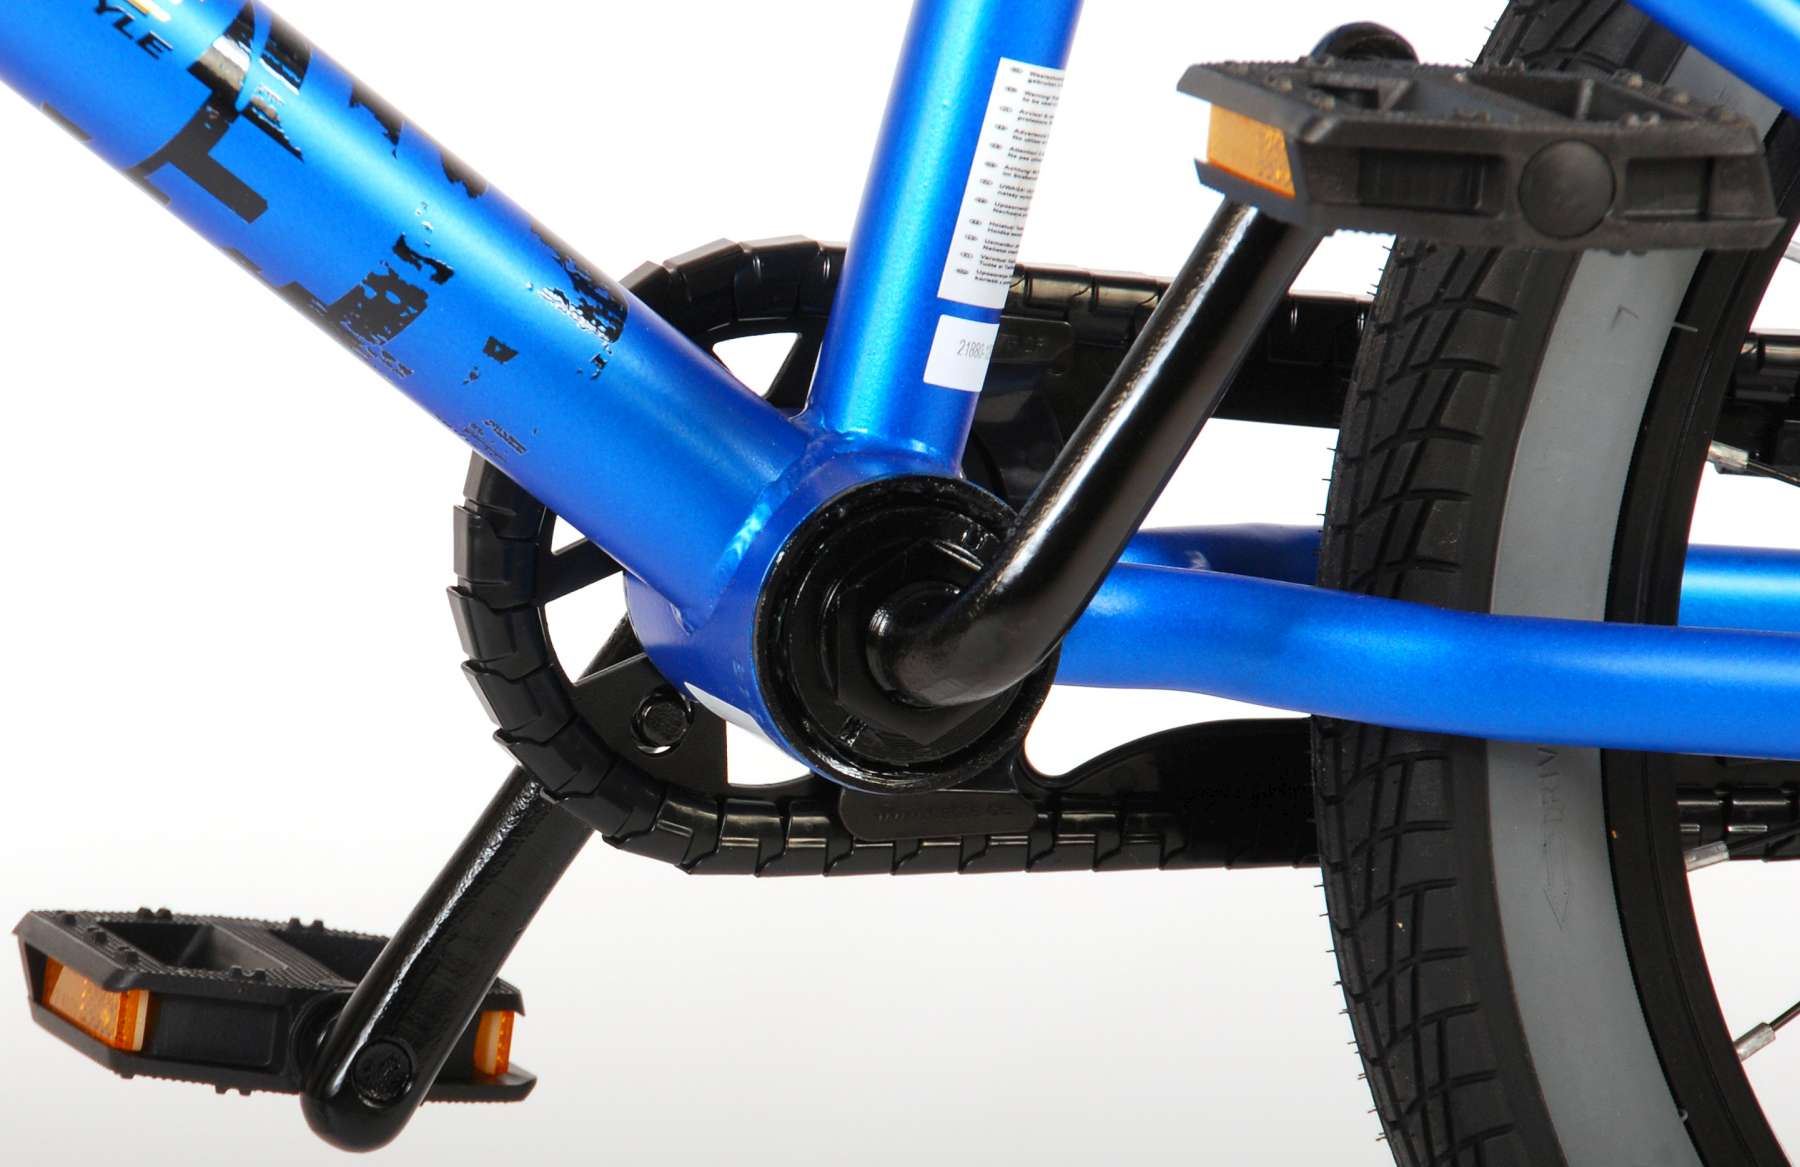 Kinderfahrrad Cool Rider Fahrrad für Jungen 18 Zoll Kinderrad in Blau